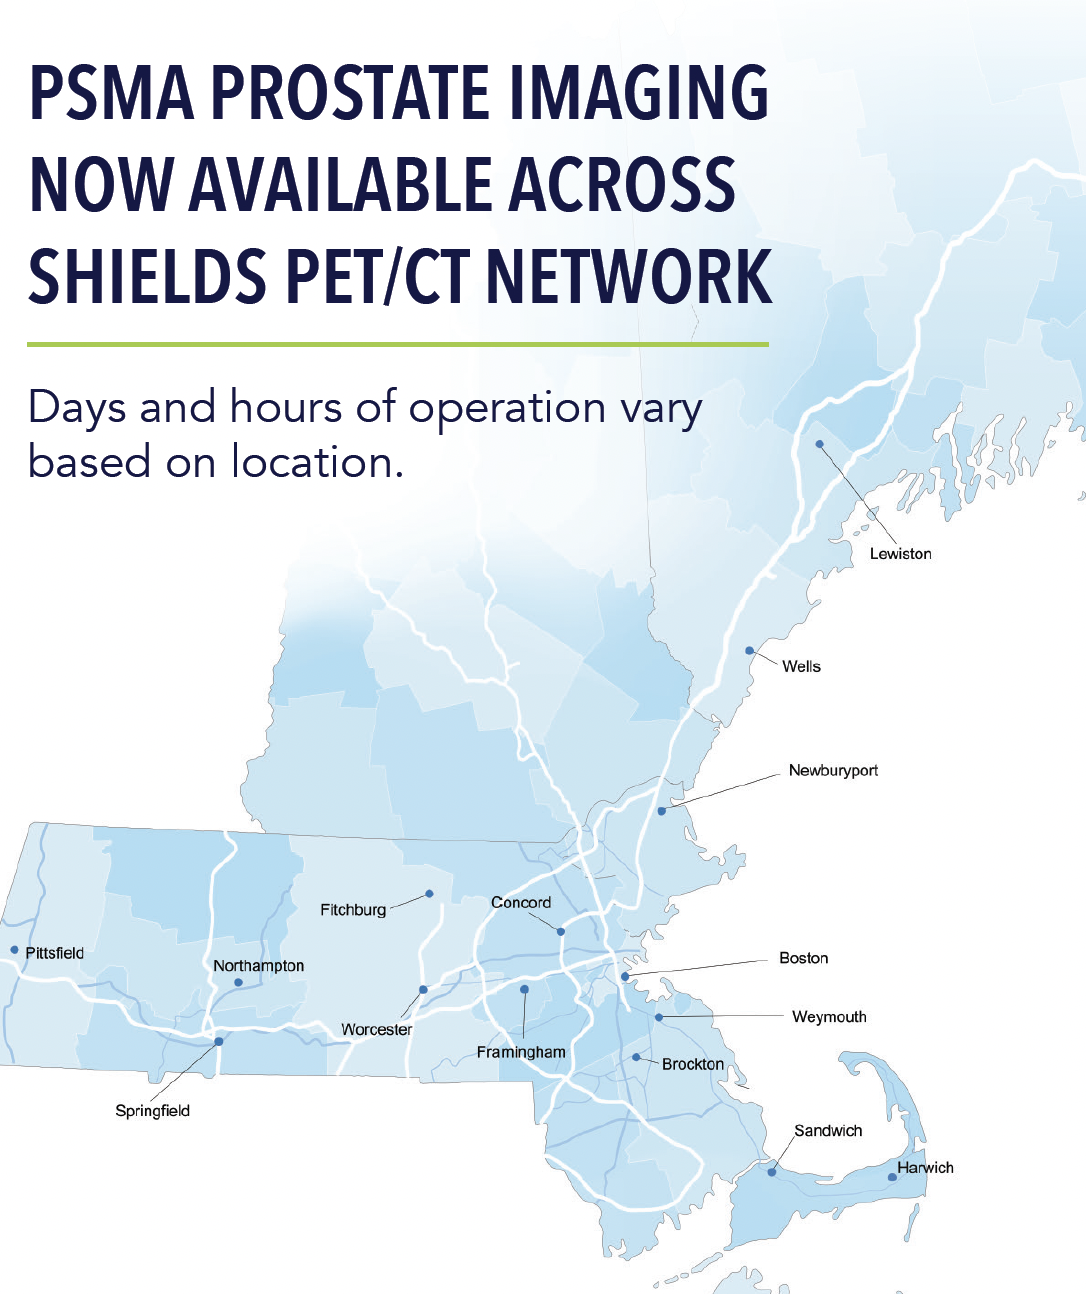 Shields PET/CT Network